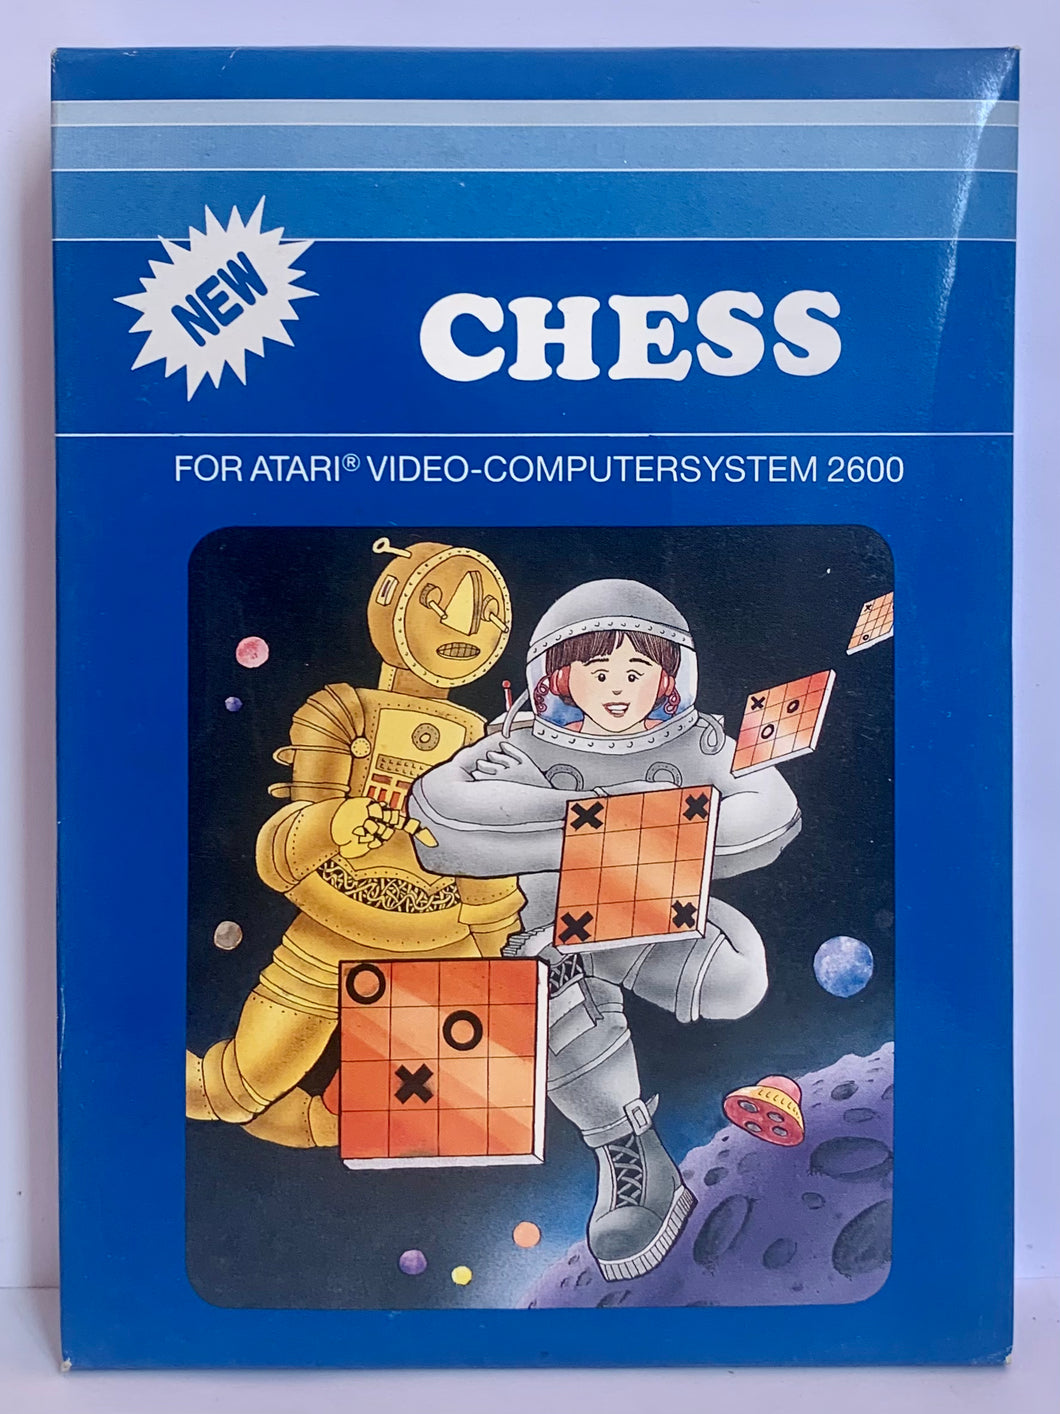 Chess - Atari VCS 2600 - NTSC - CIB